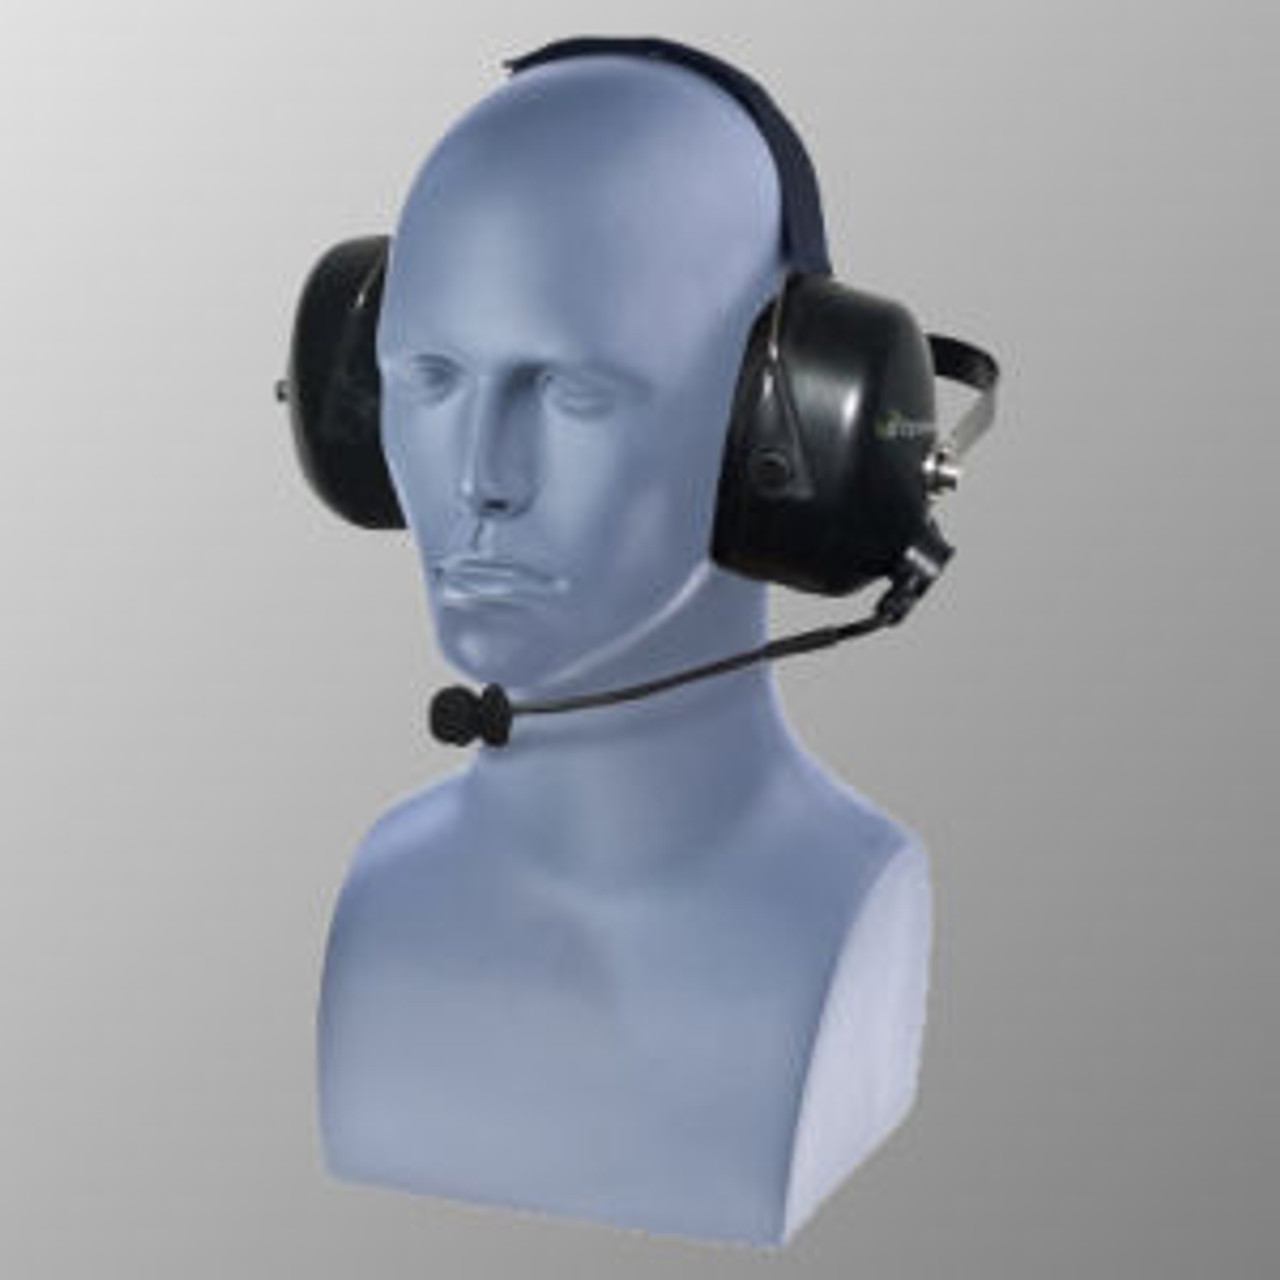 ICOM IC-F4011 Noise Canceling Double Muff Behind The Head Headset